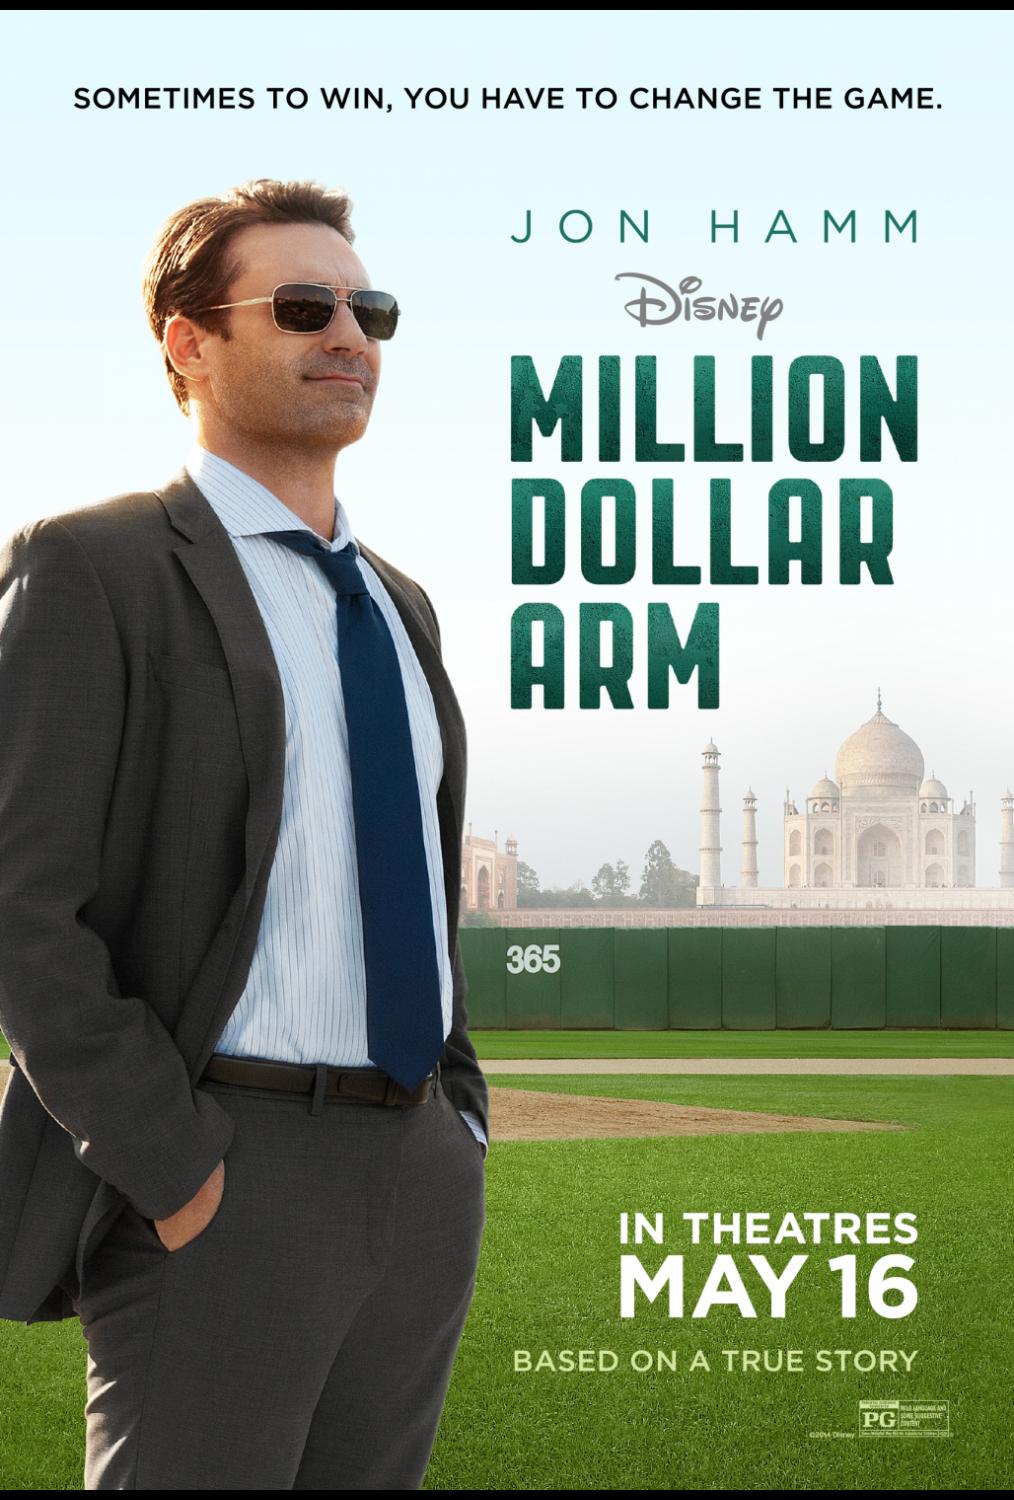 New Million Dollar Arm Clips! #disney #milliondollararm